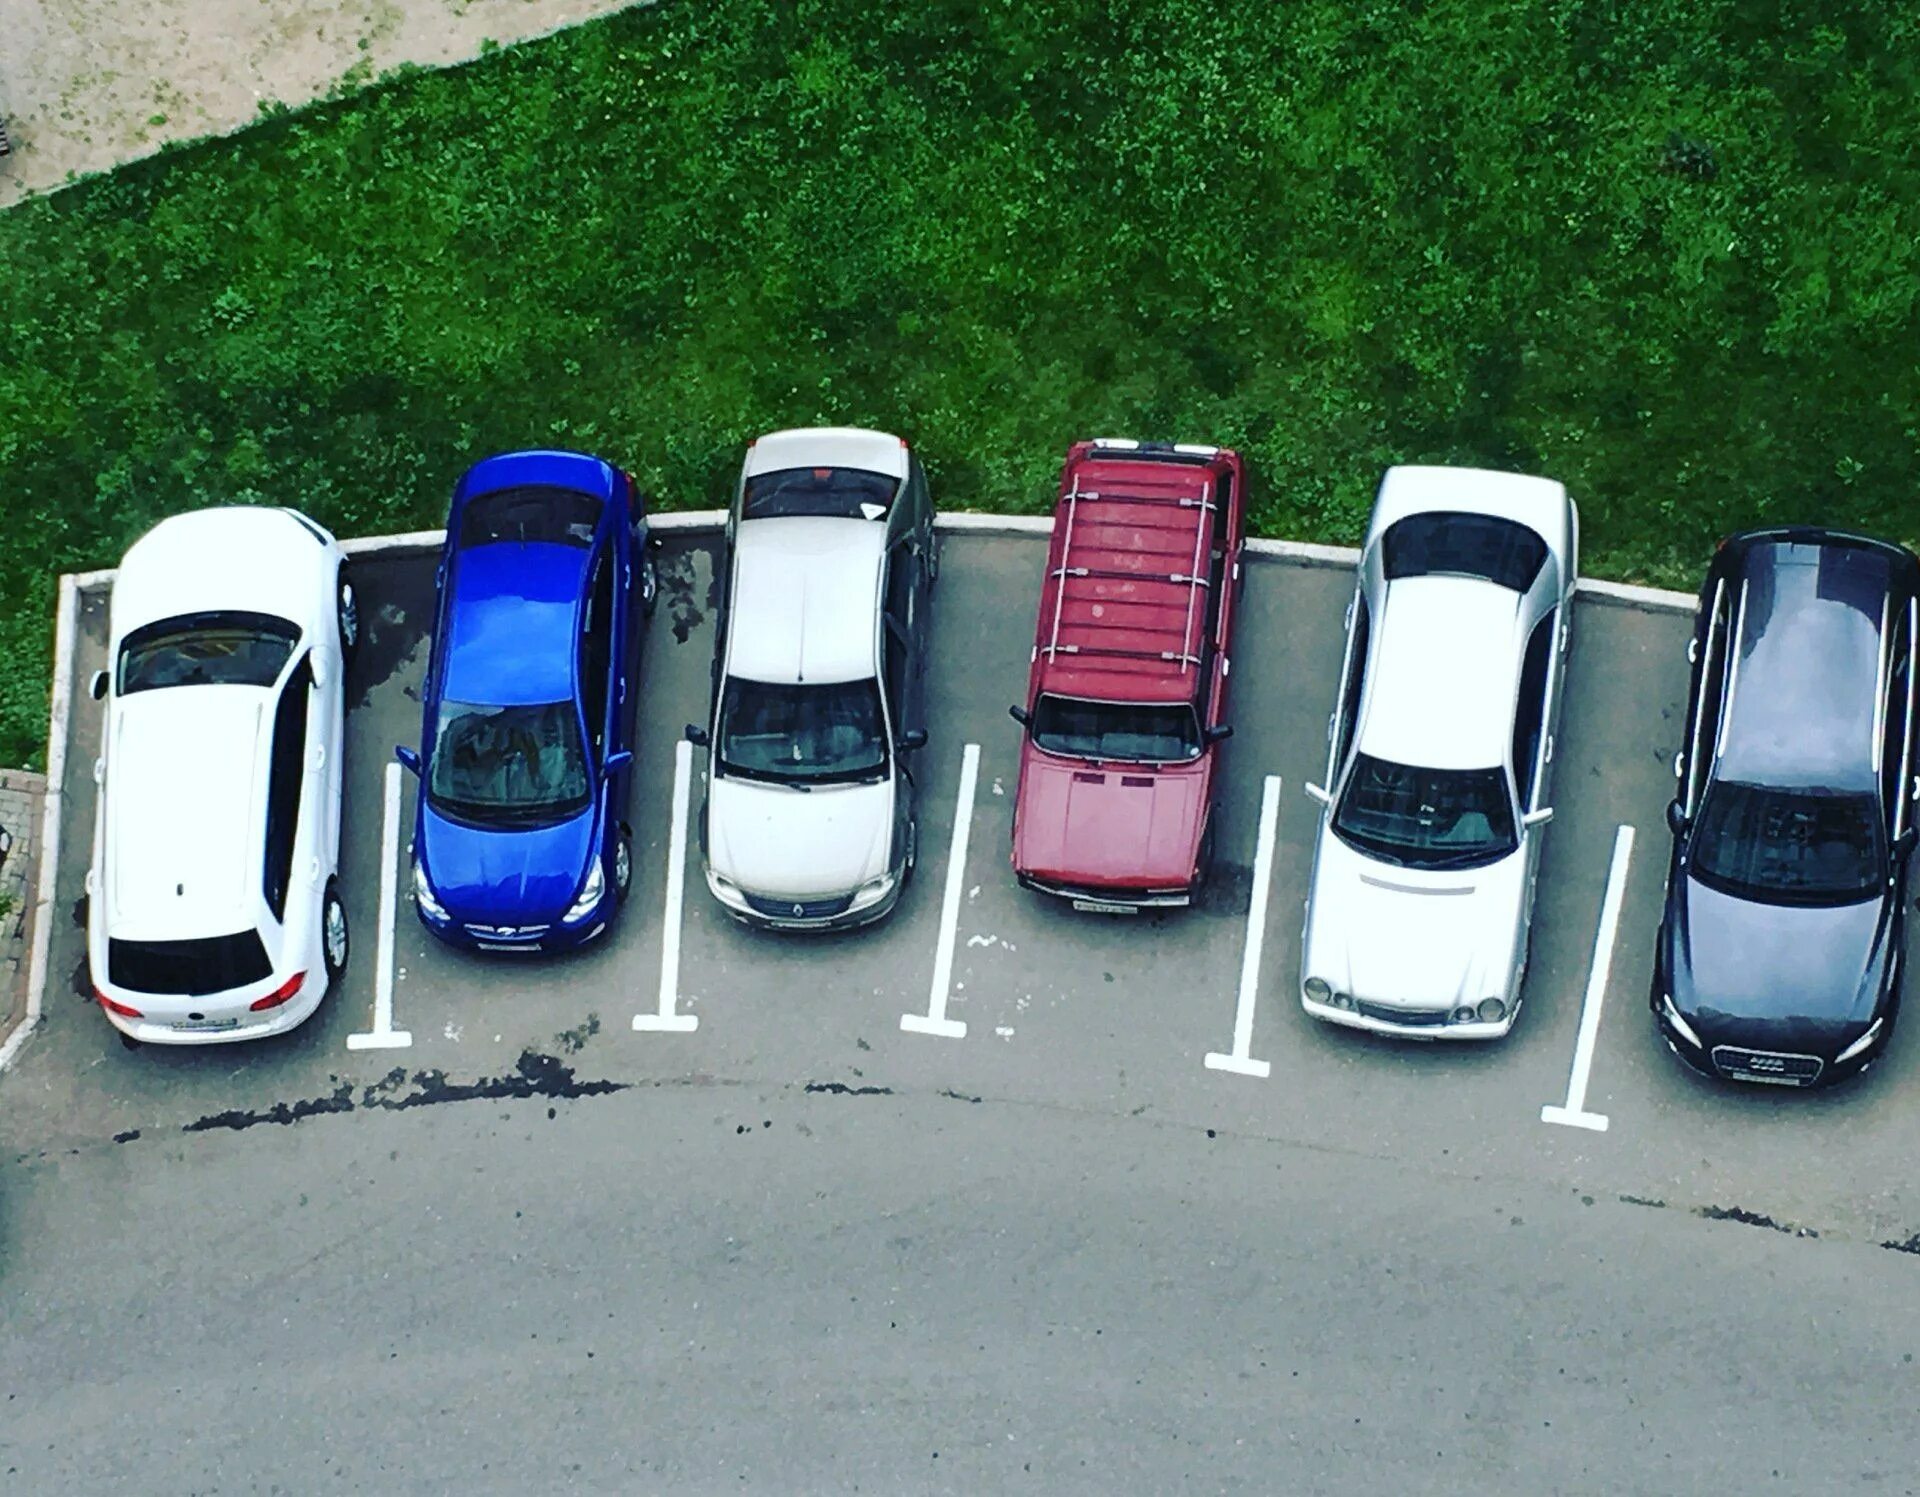 More parking lots. Стоянка автомобилей. Машина на парковке. Автомобиль в паркинге. Разметка парковки во дворе.